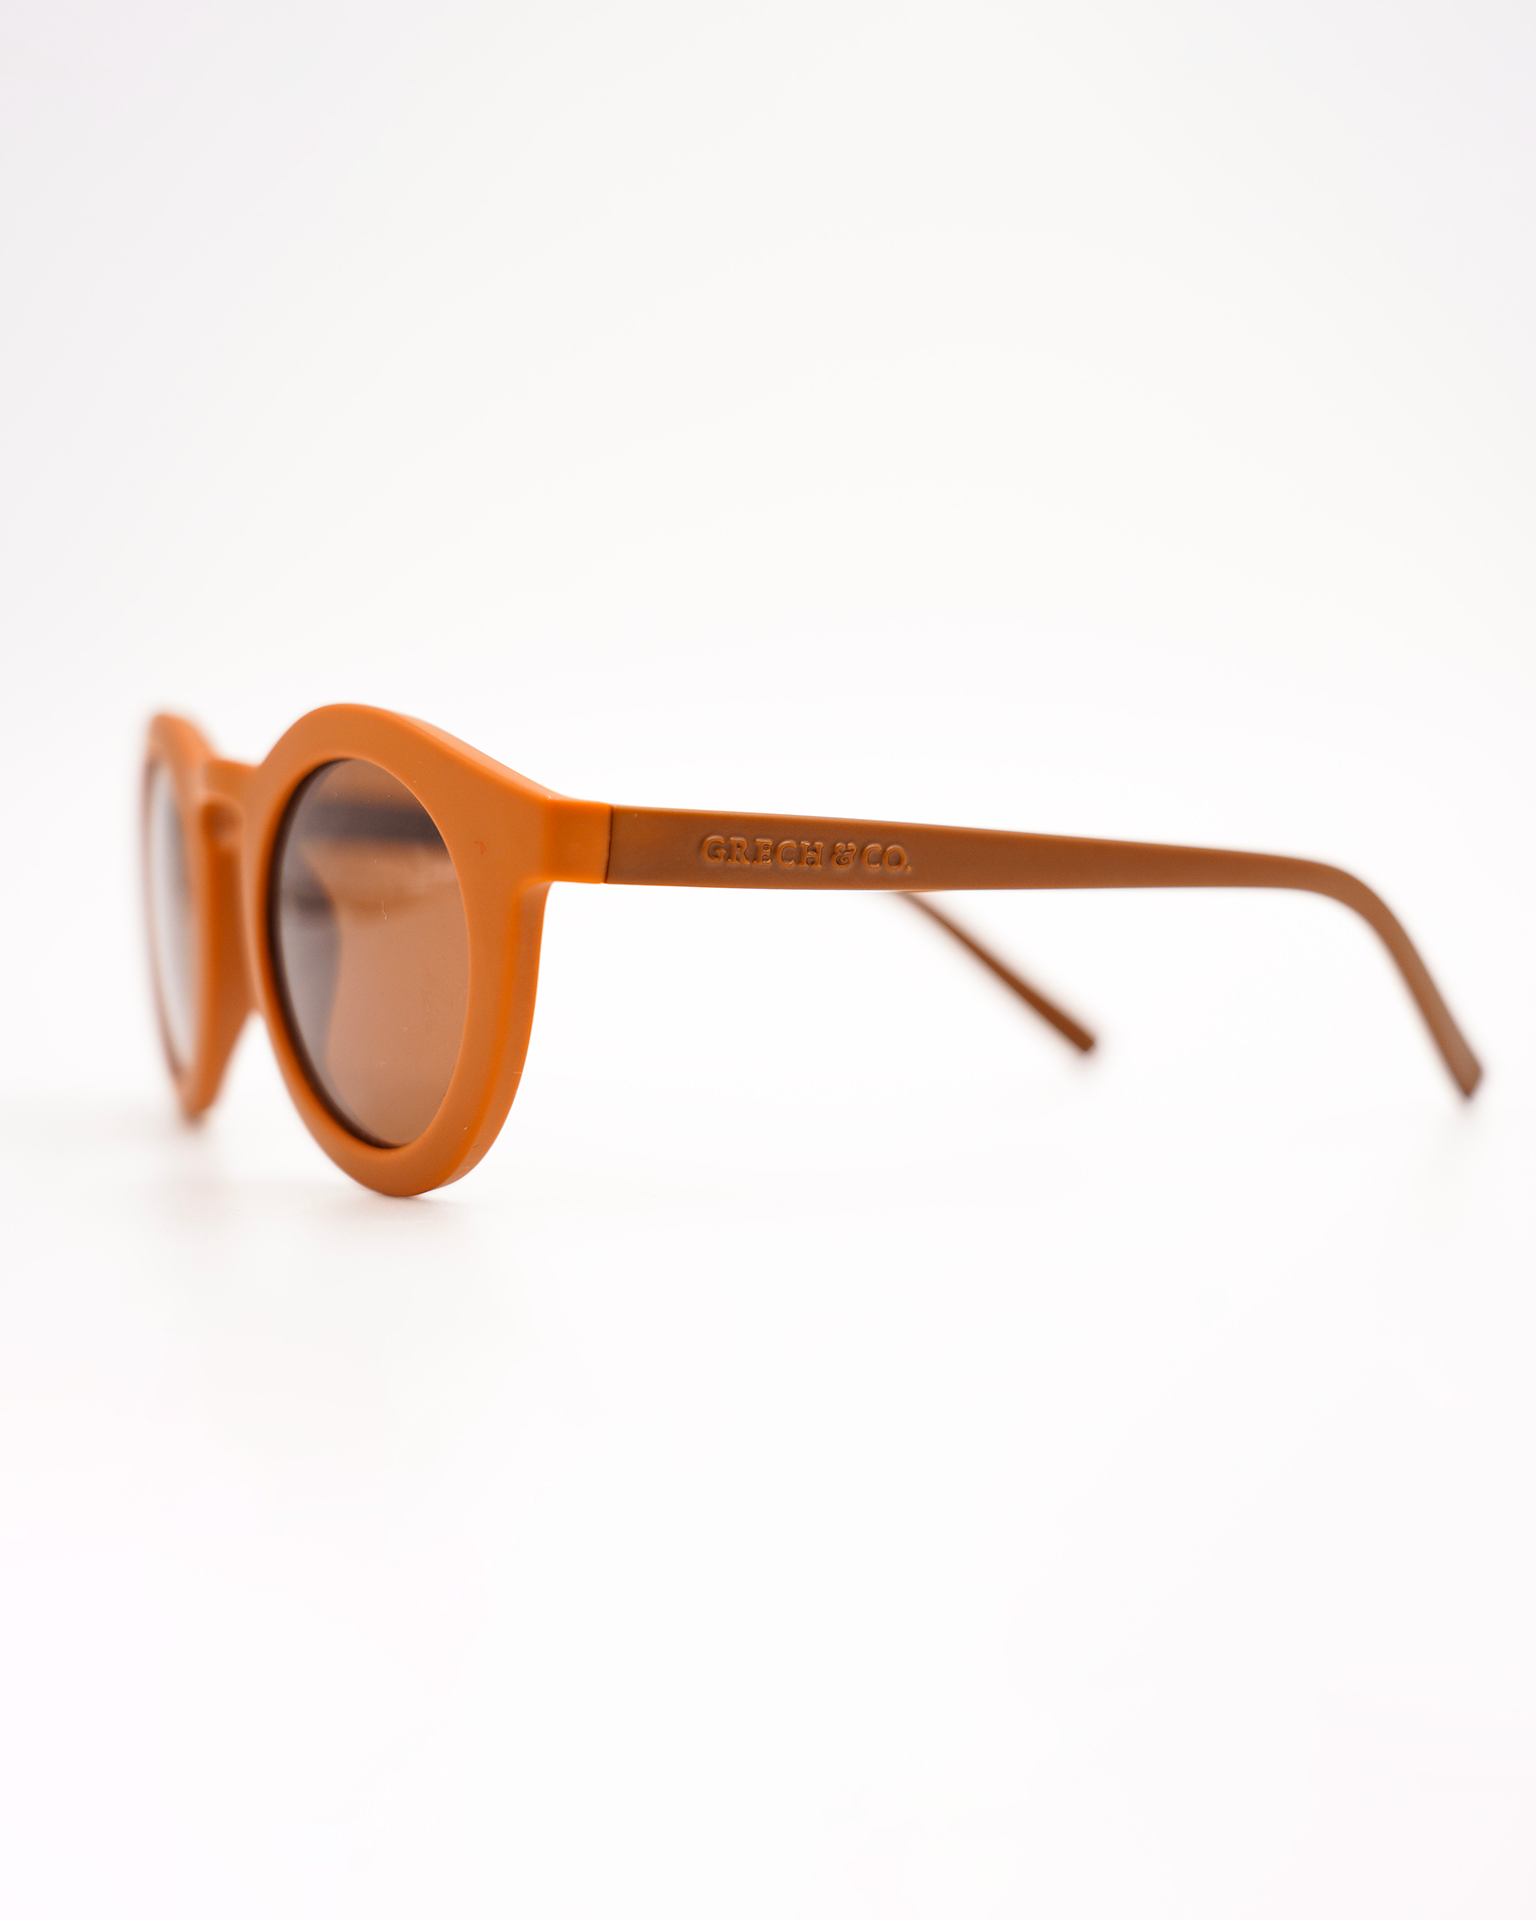 Little grech + co accessories polarized baby sunglasses in tierra